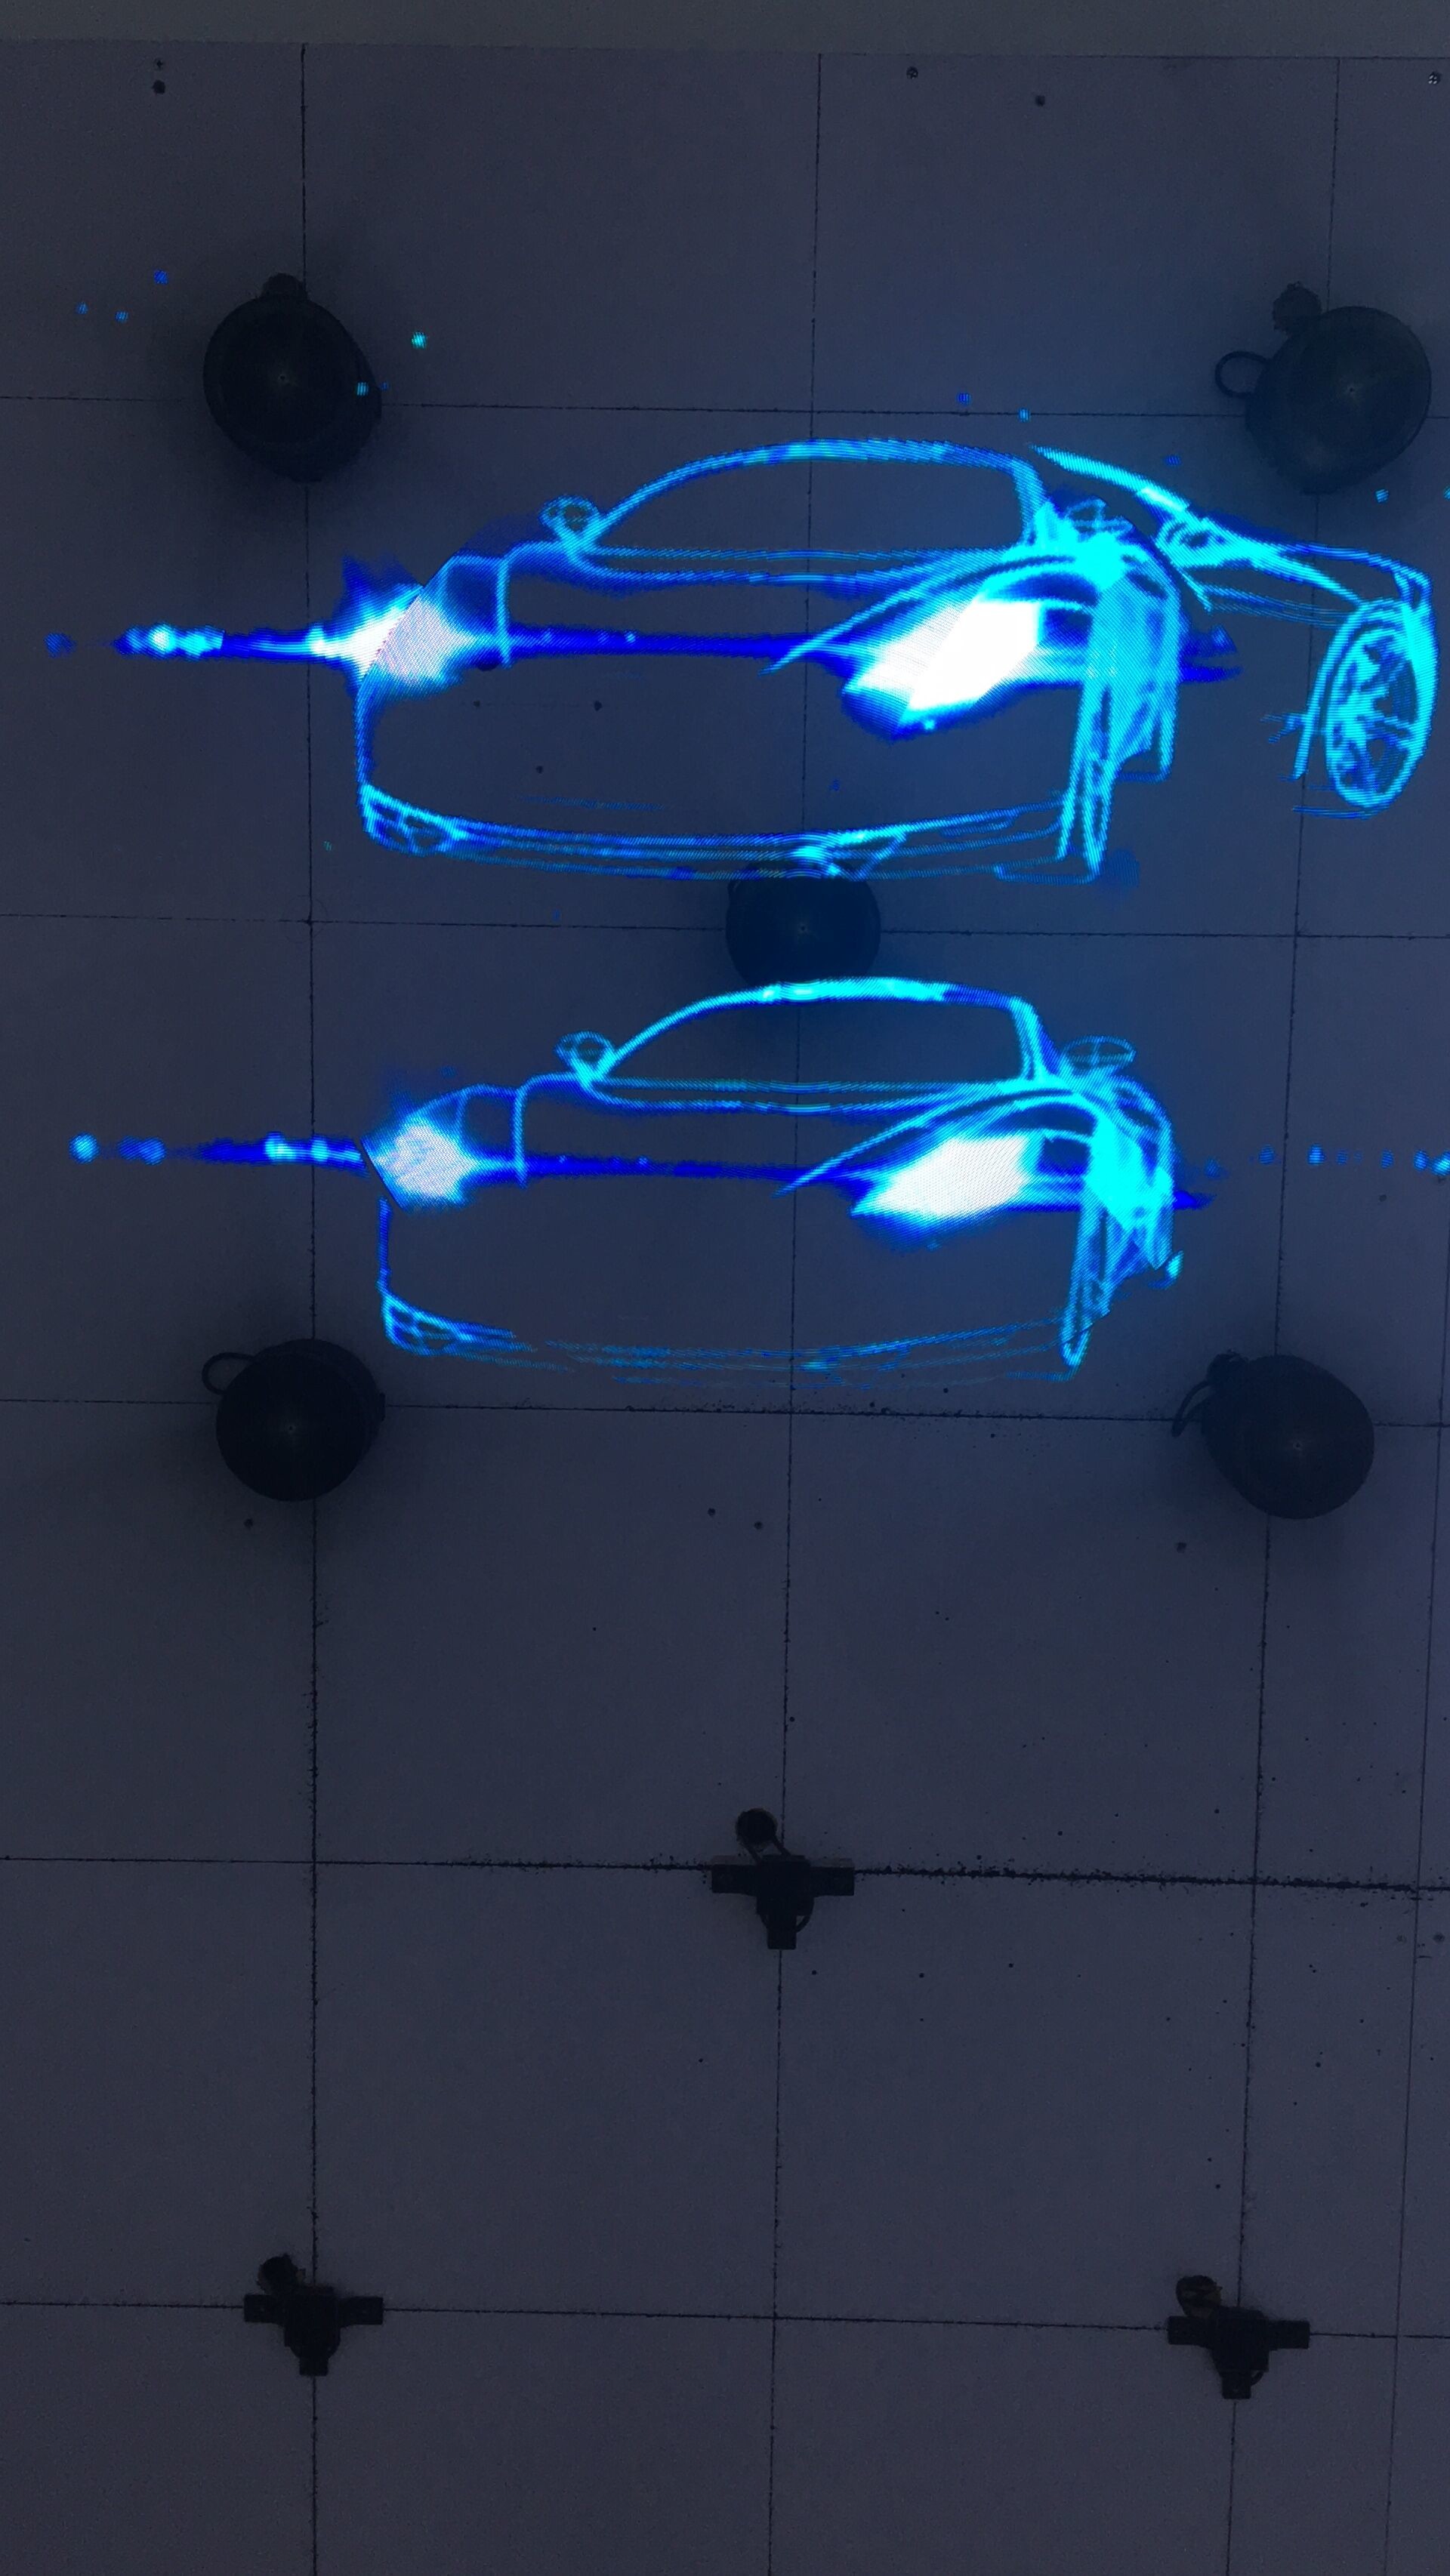  Wiikk 65cm 3D Holographic LED Fan For Supermarket High Resolution 720 LEDs Manufactures